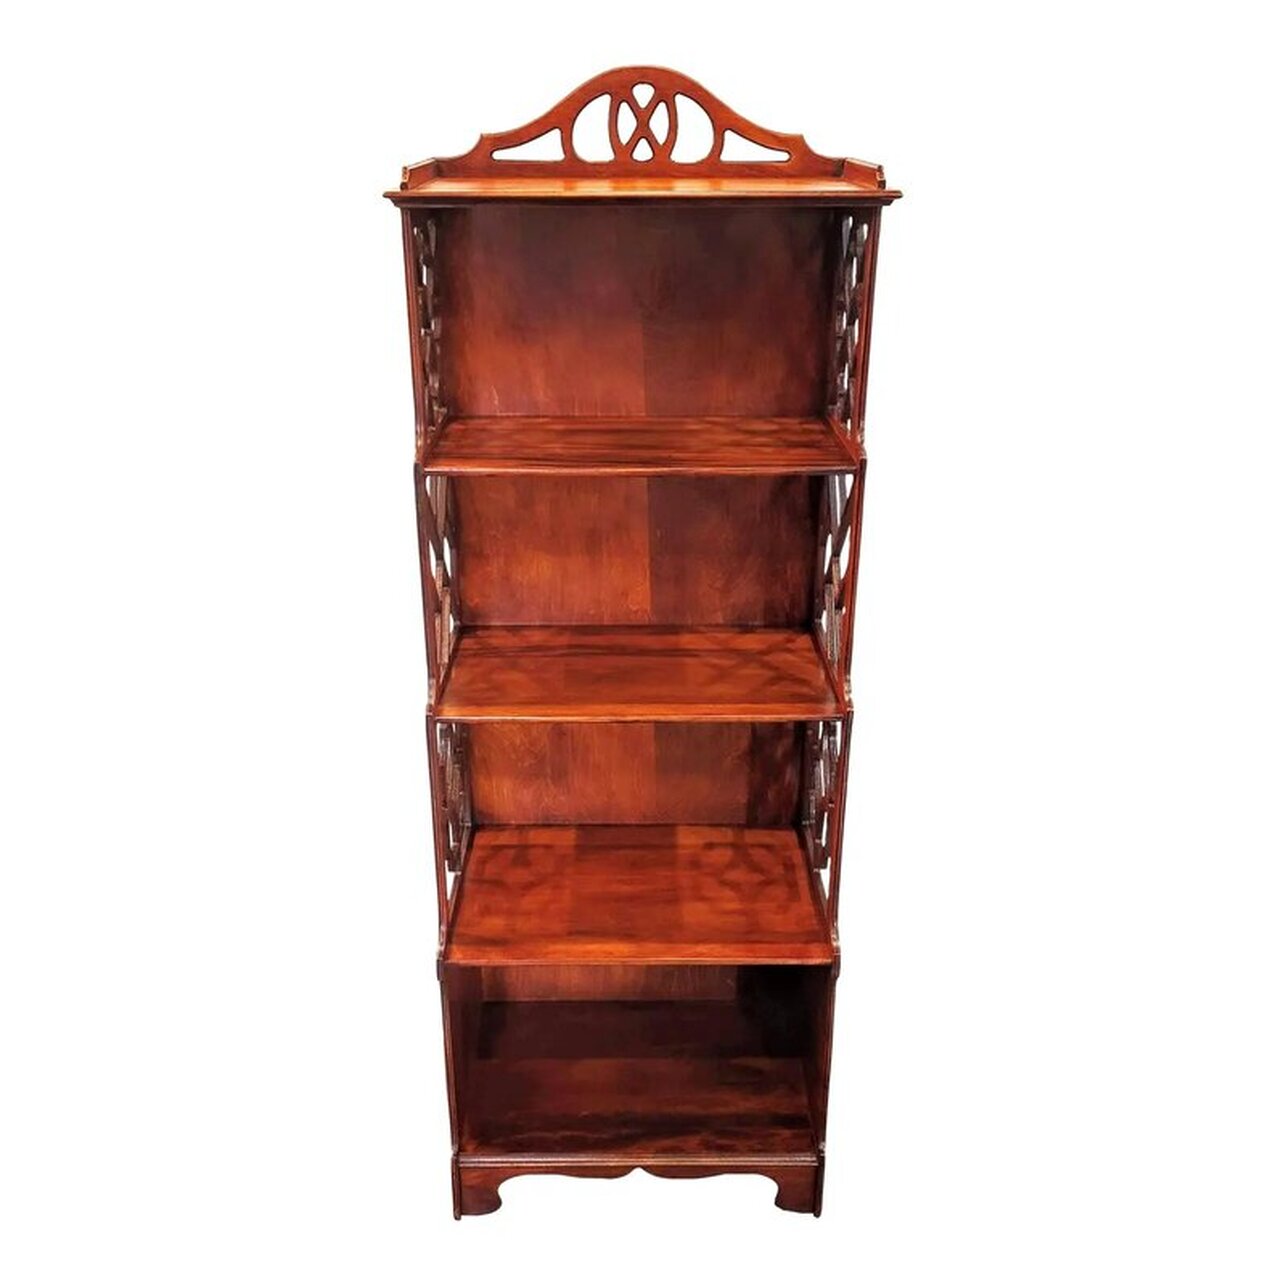 English victorian turned leg three shelf small wooden etagere display shelf